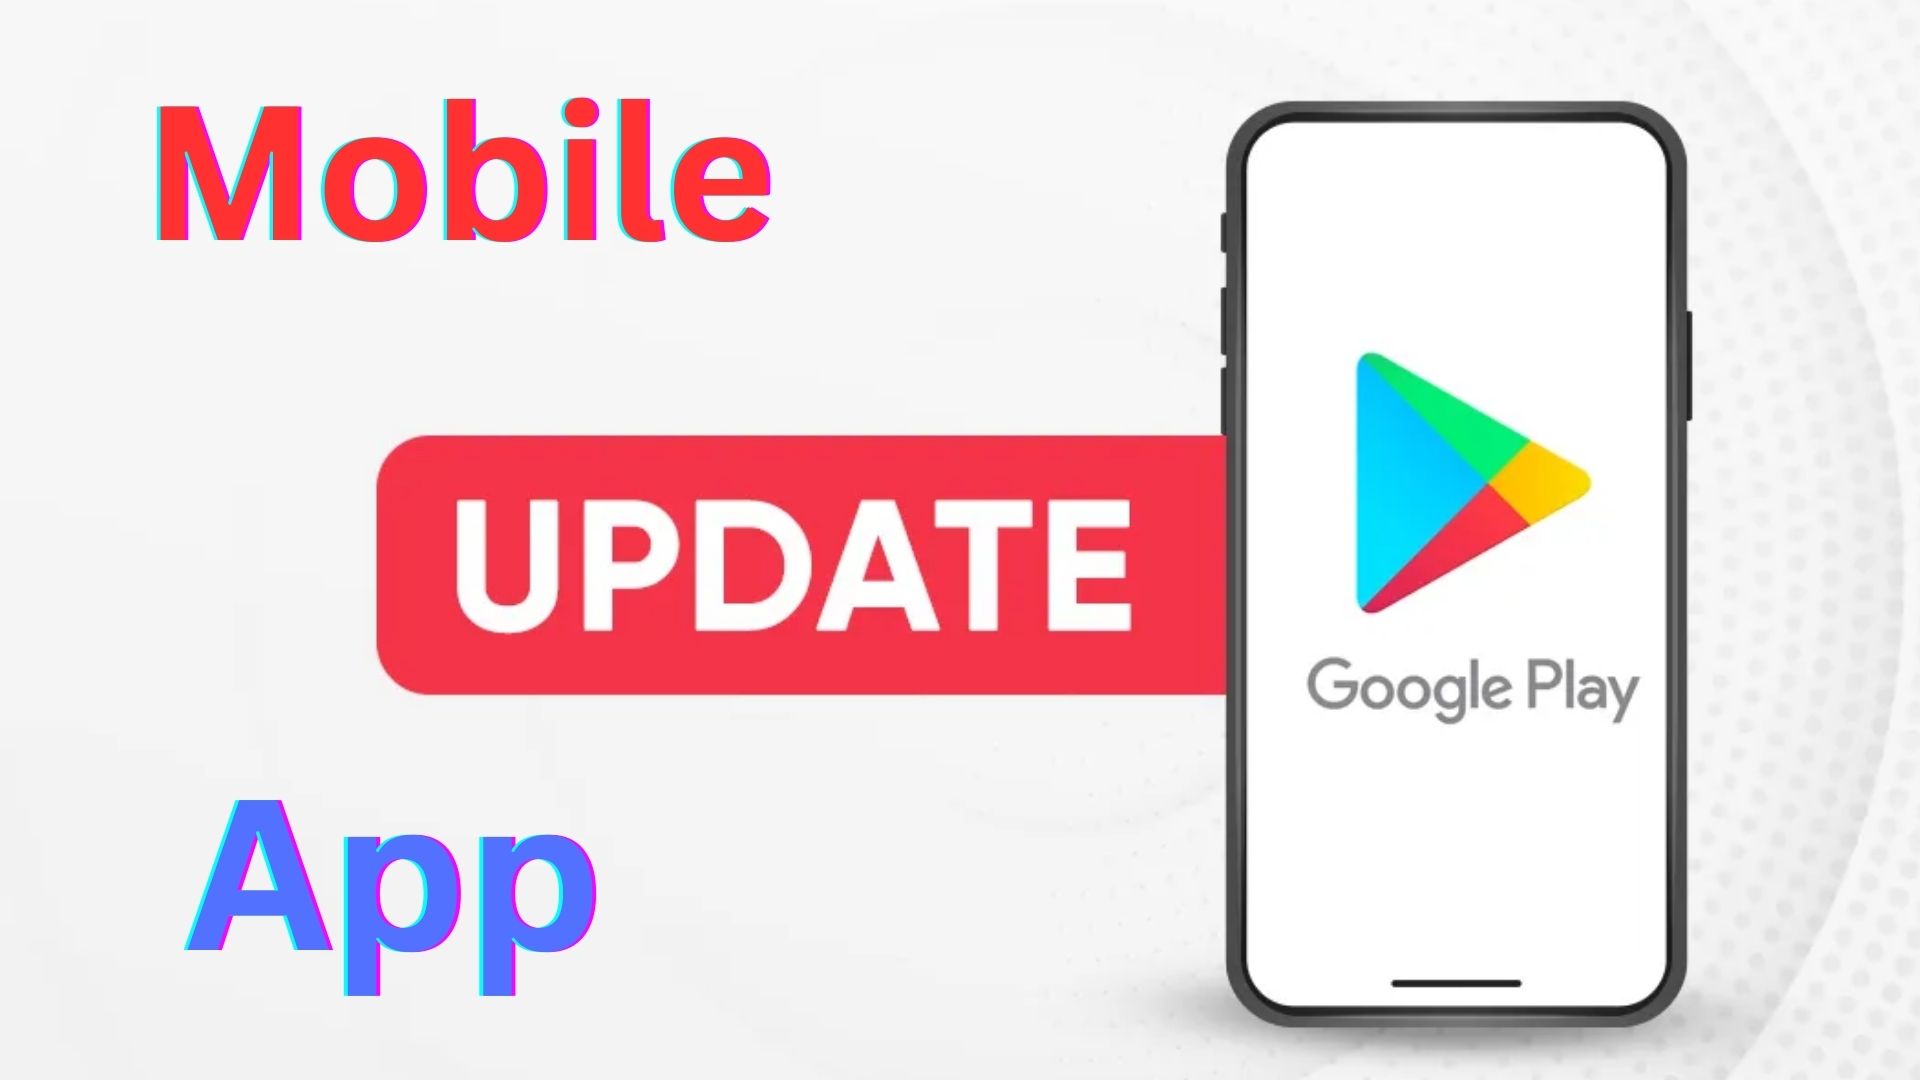 Mobile Update App